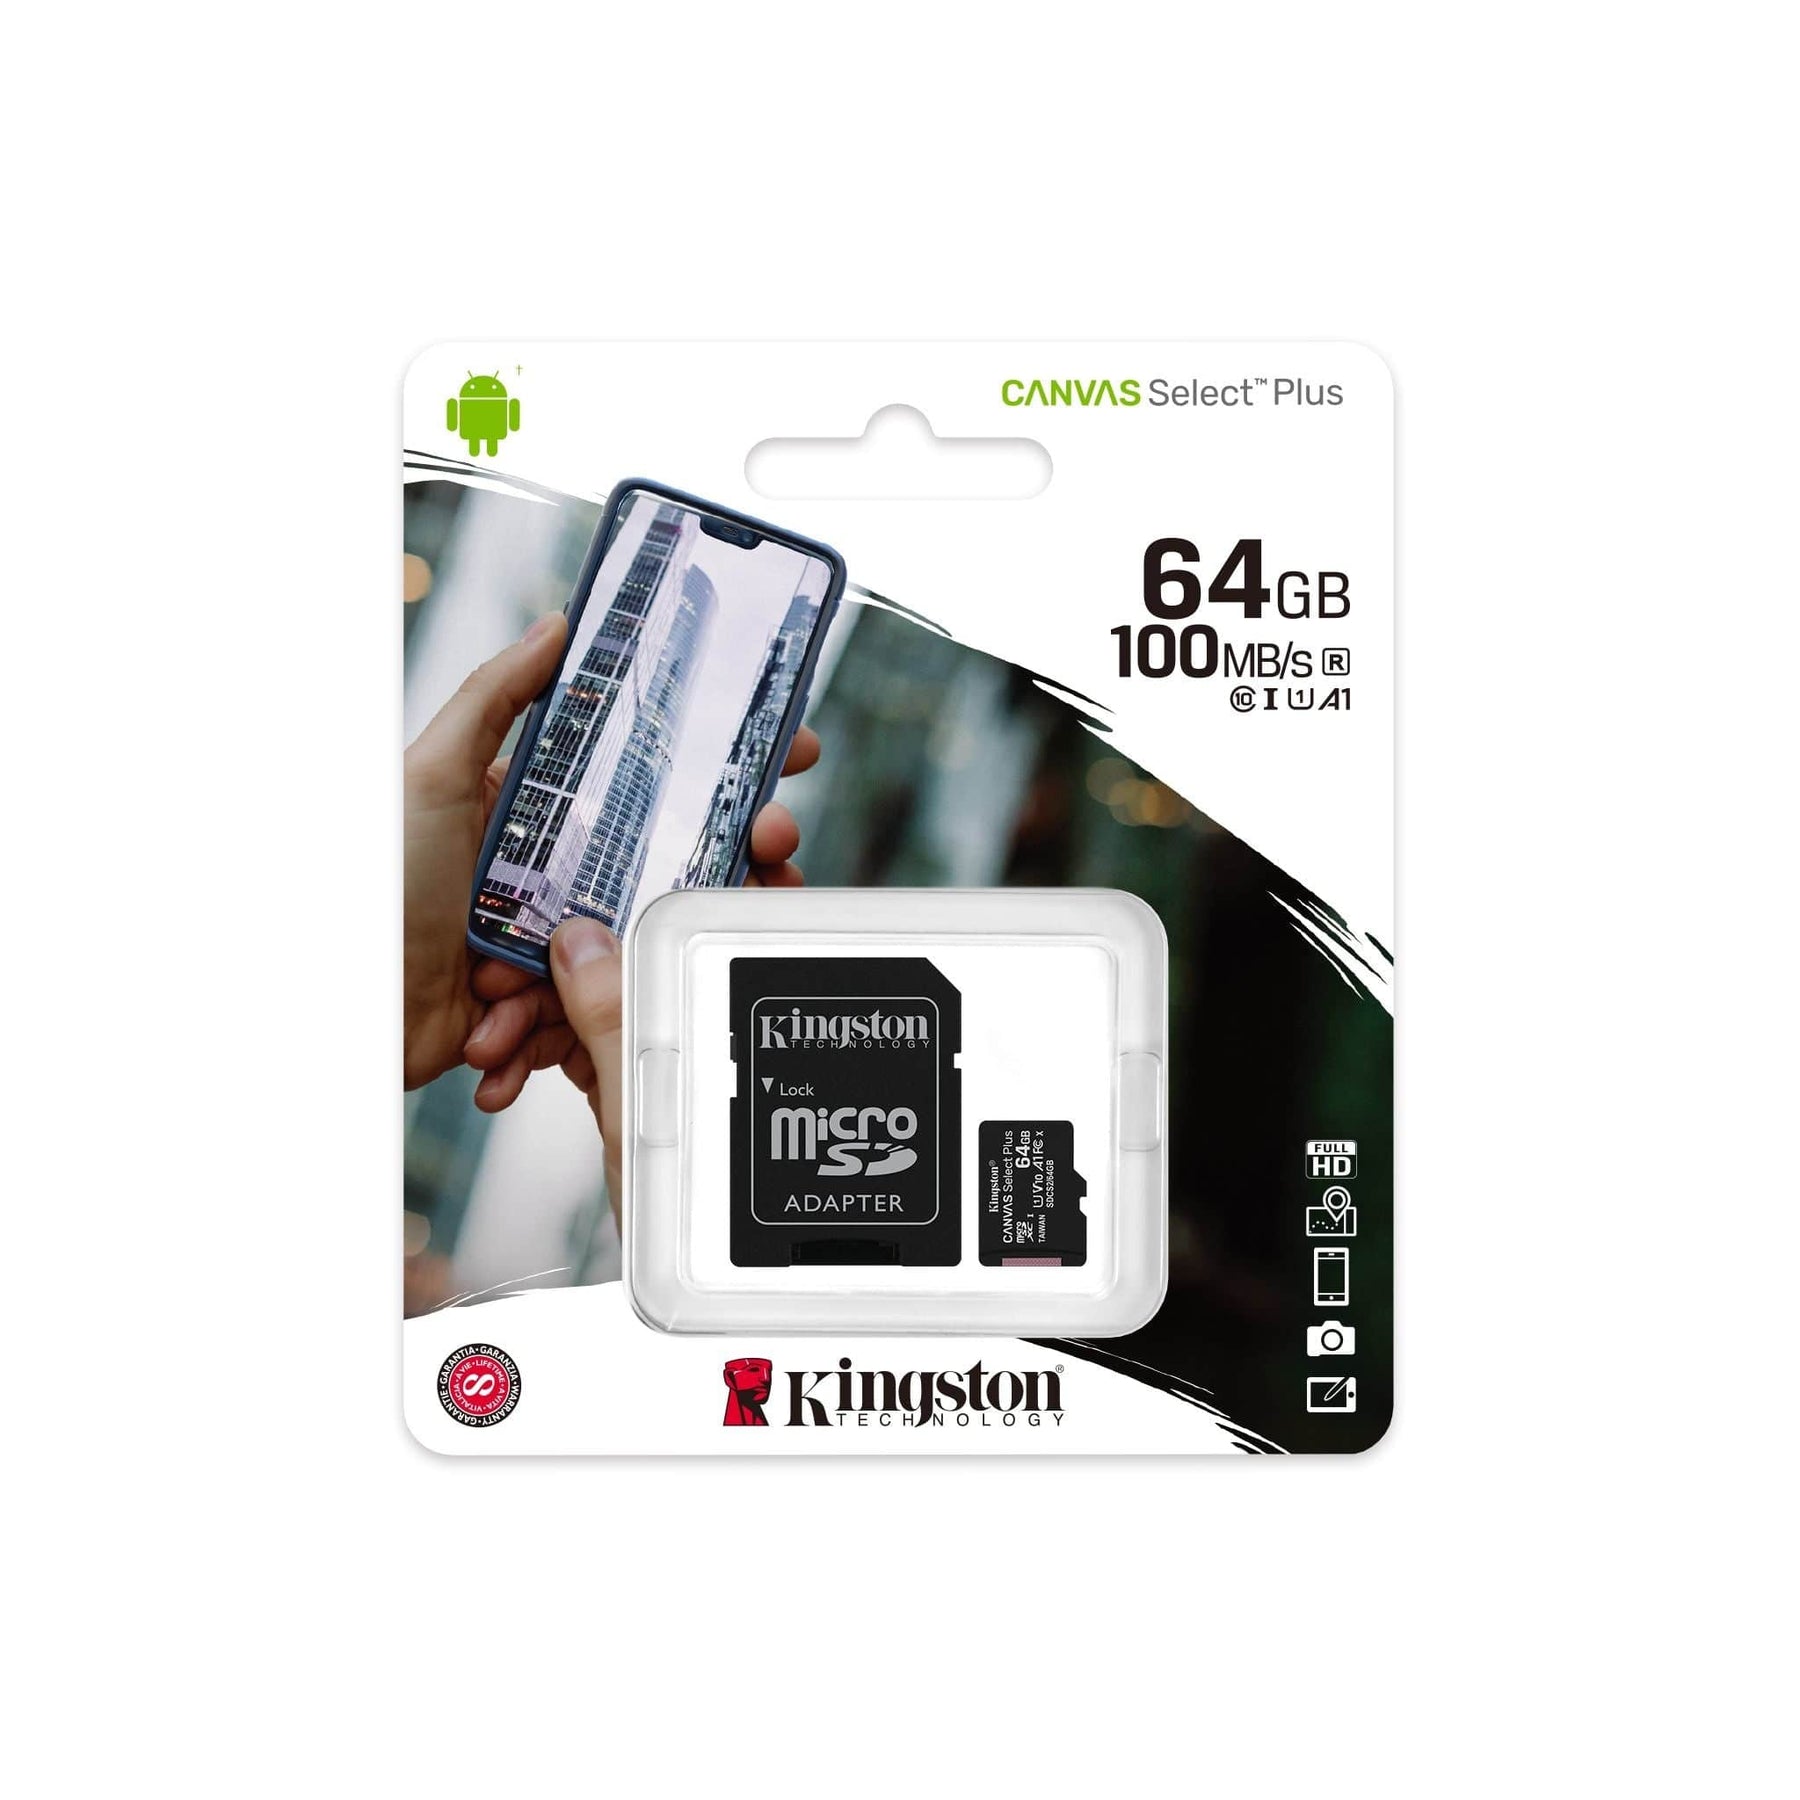 Kingston Default Kingston Technology microSD memory card Class 10 64 GB SDCS2/64GB